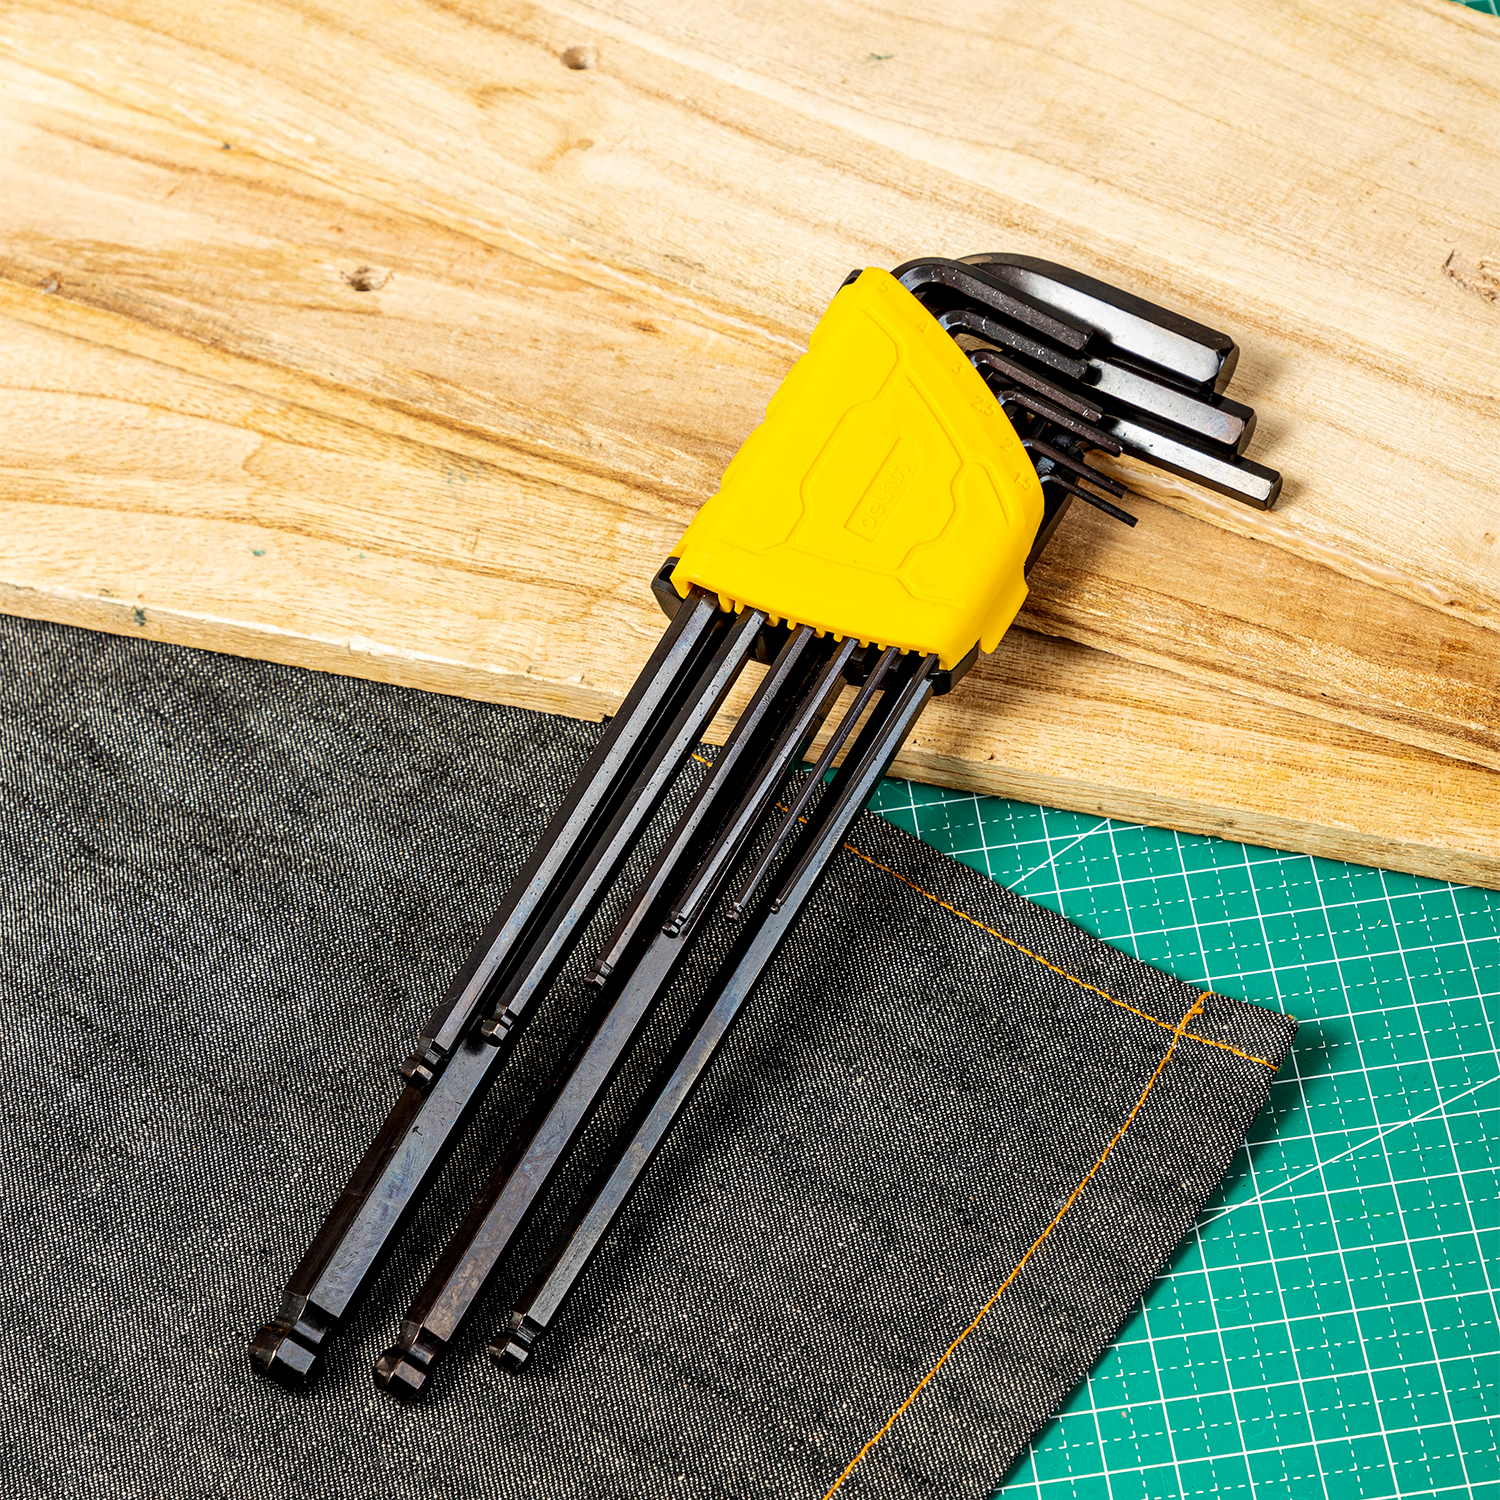 Craftsman long handle Hex Keys for Furniture Fitting